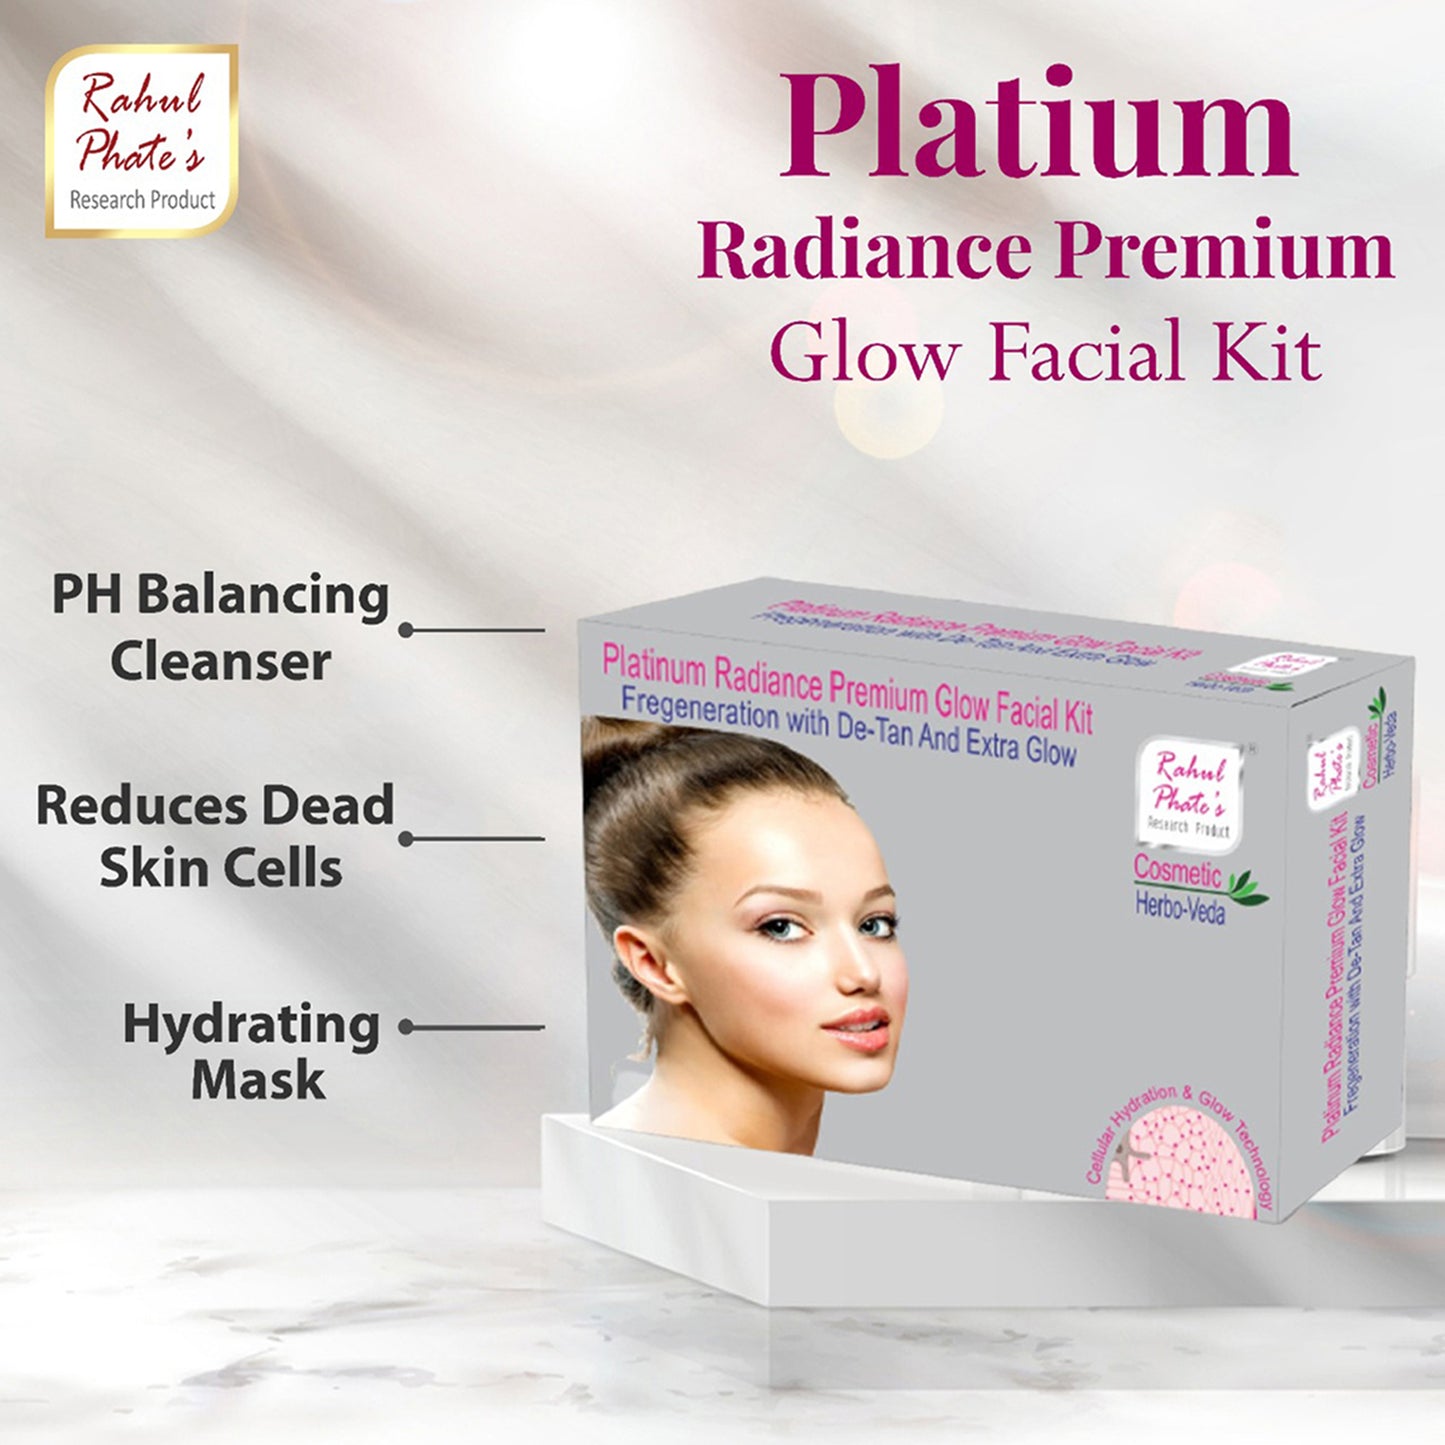 Platinum Radiance Premium Glow Facial Kit